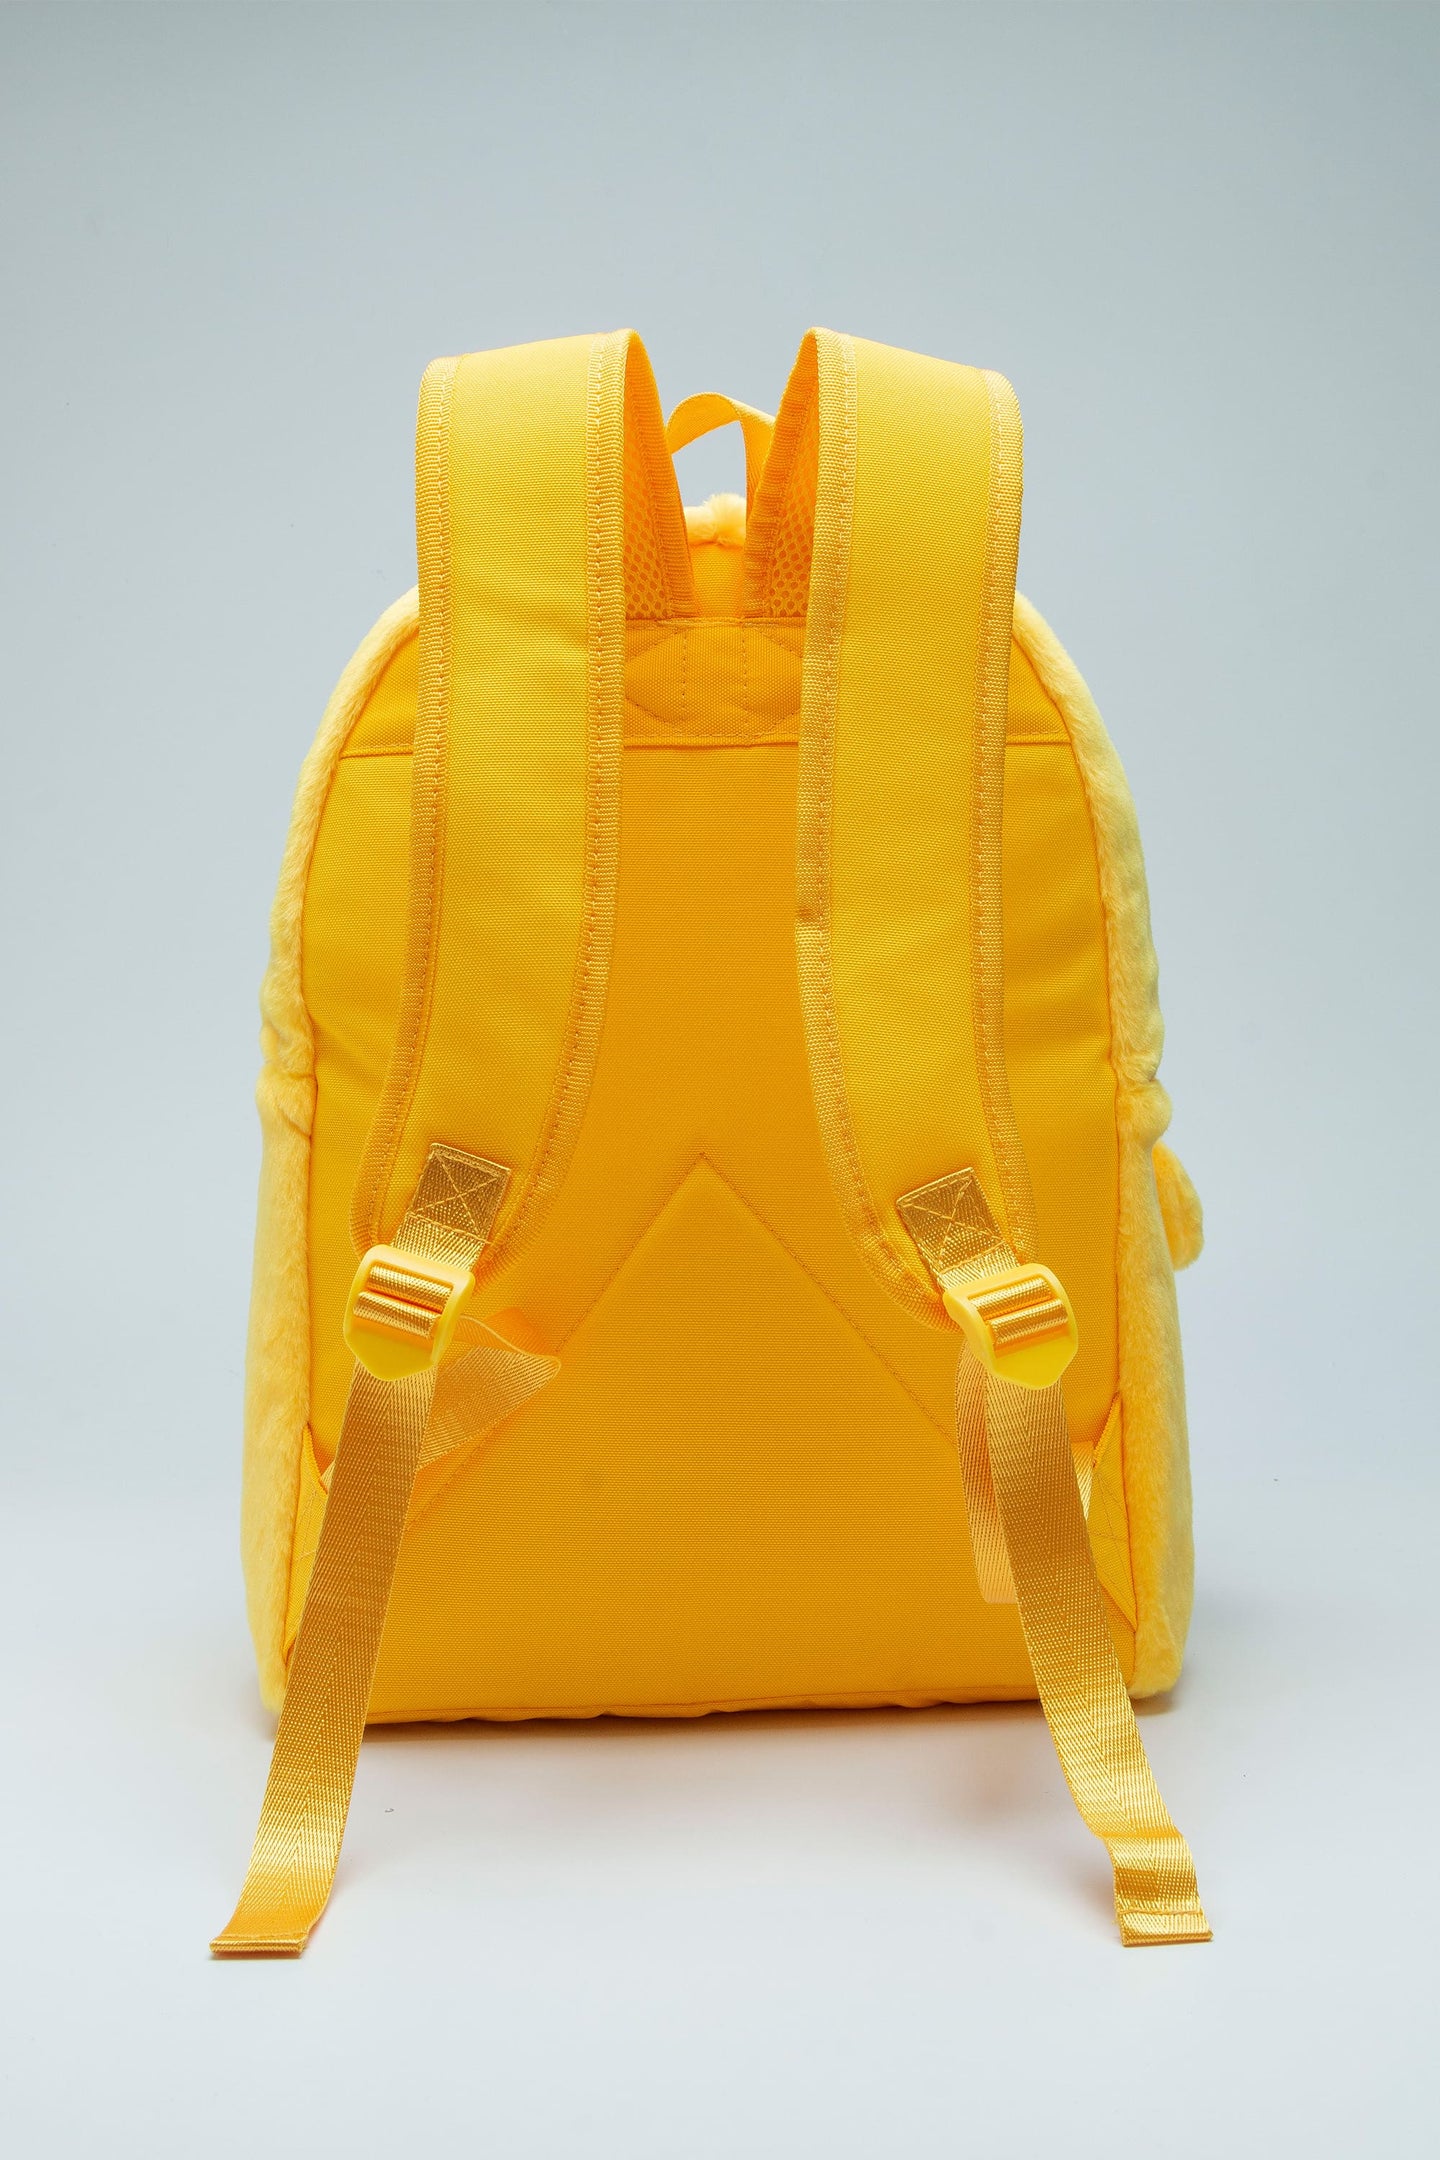 B.Duck Backpack Yellow 3D Duckbill Shape Large For Kids Cute